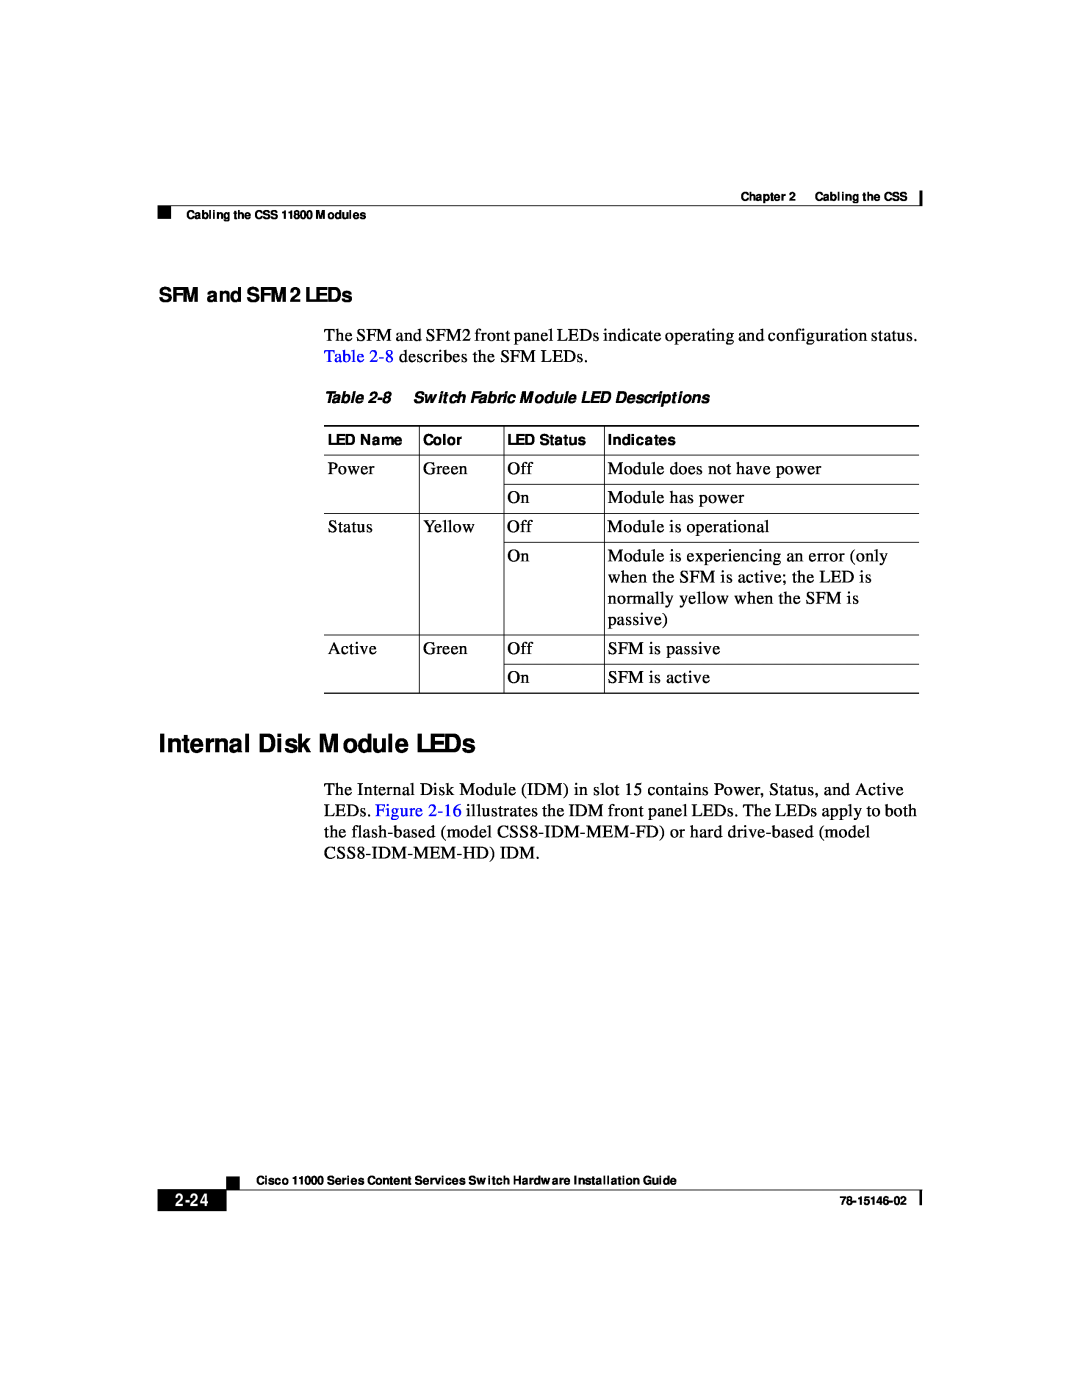 Cisco Systems 11000 Series manual Internal Disk Module LEDs, SFM and SFM2 LEDs, 2-24 